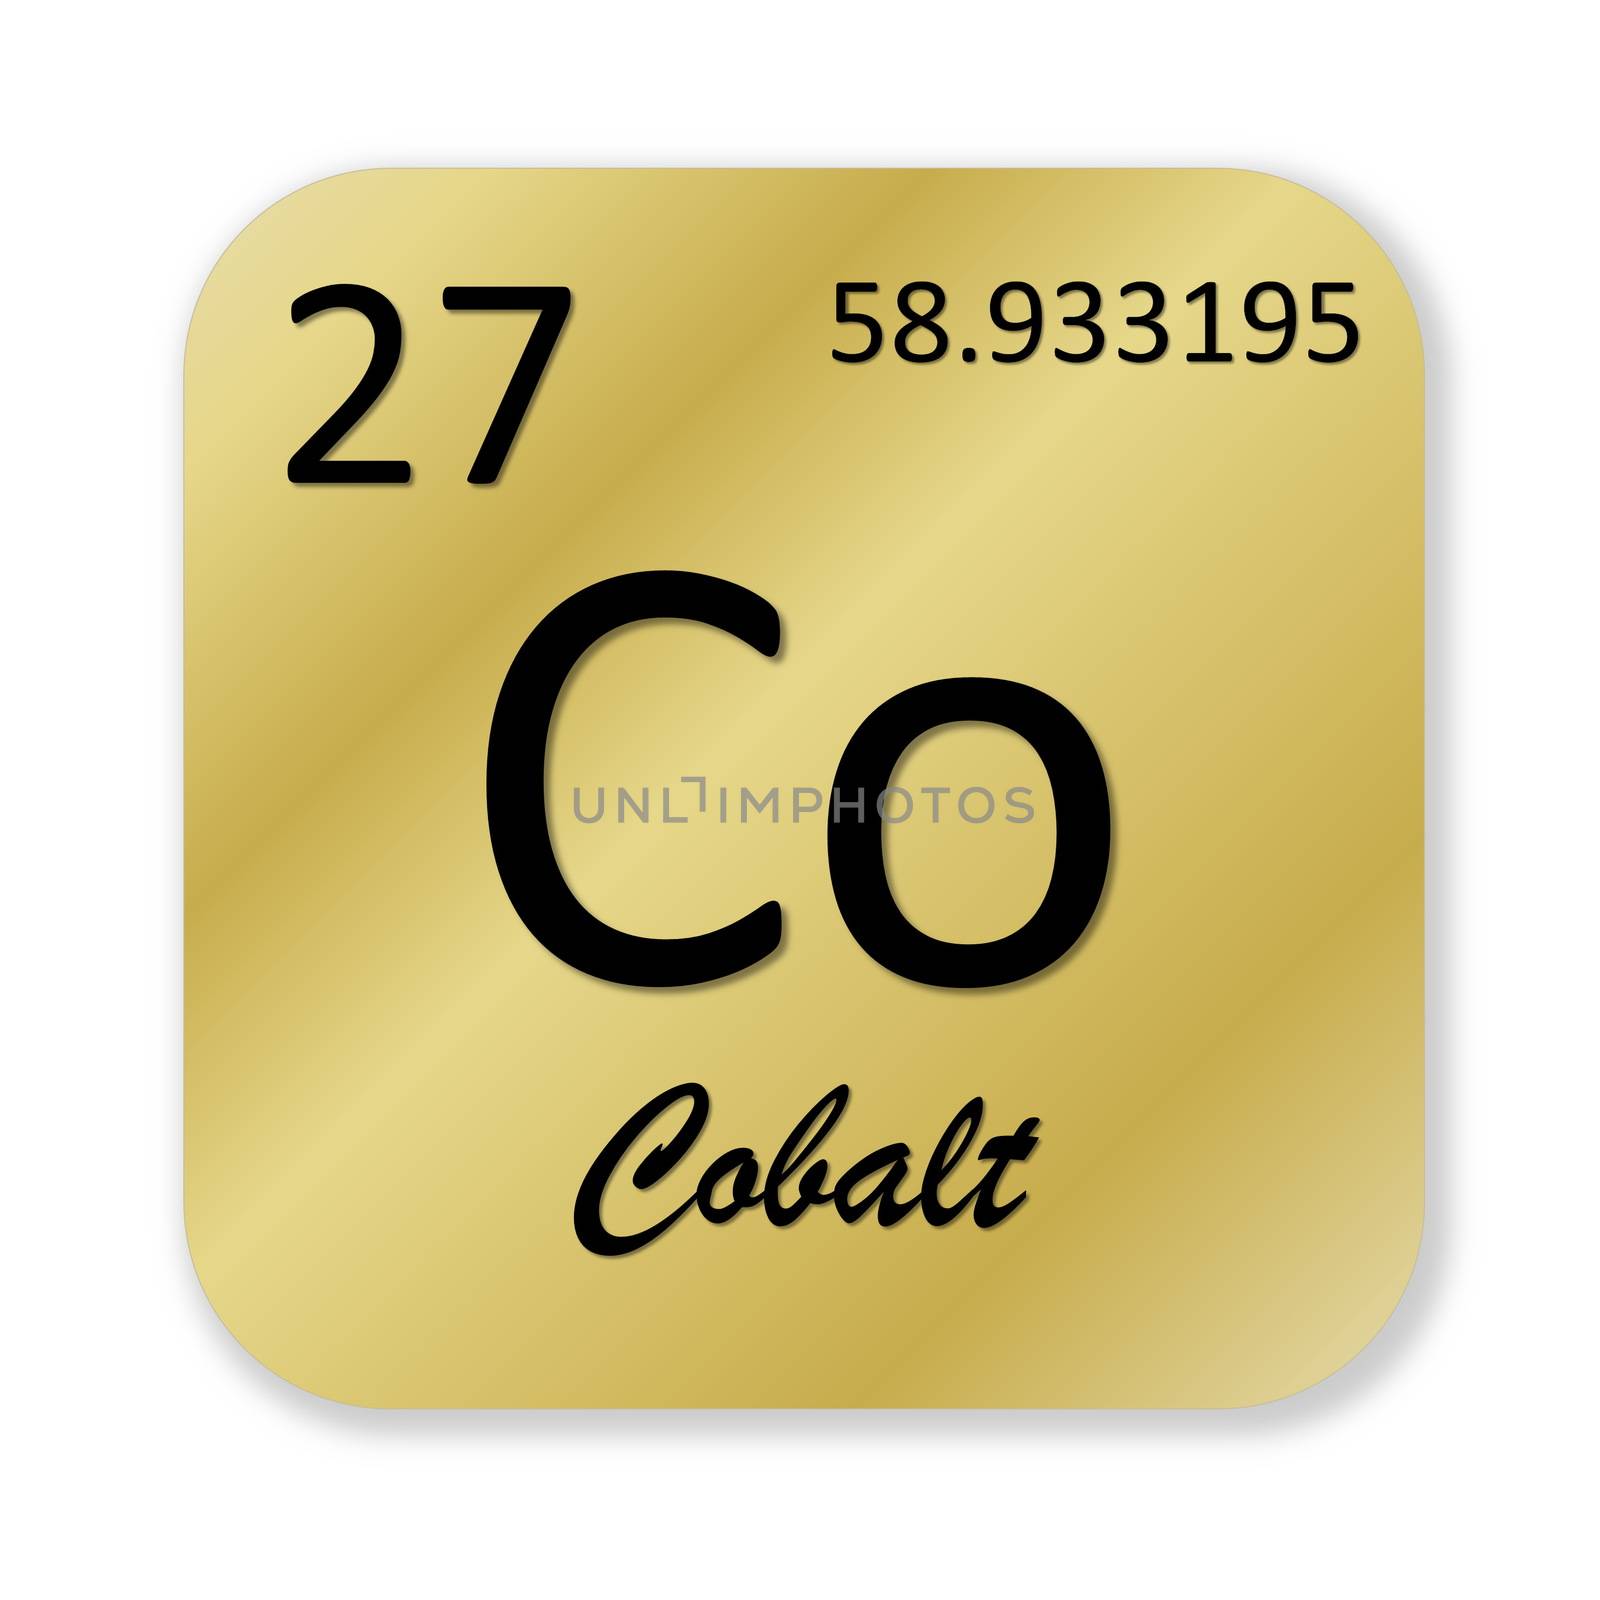 Cobalt element by Elenaphotos21